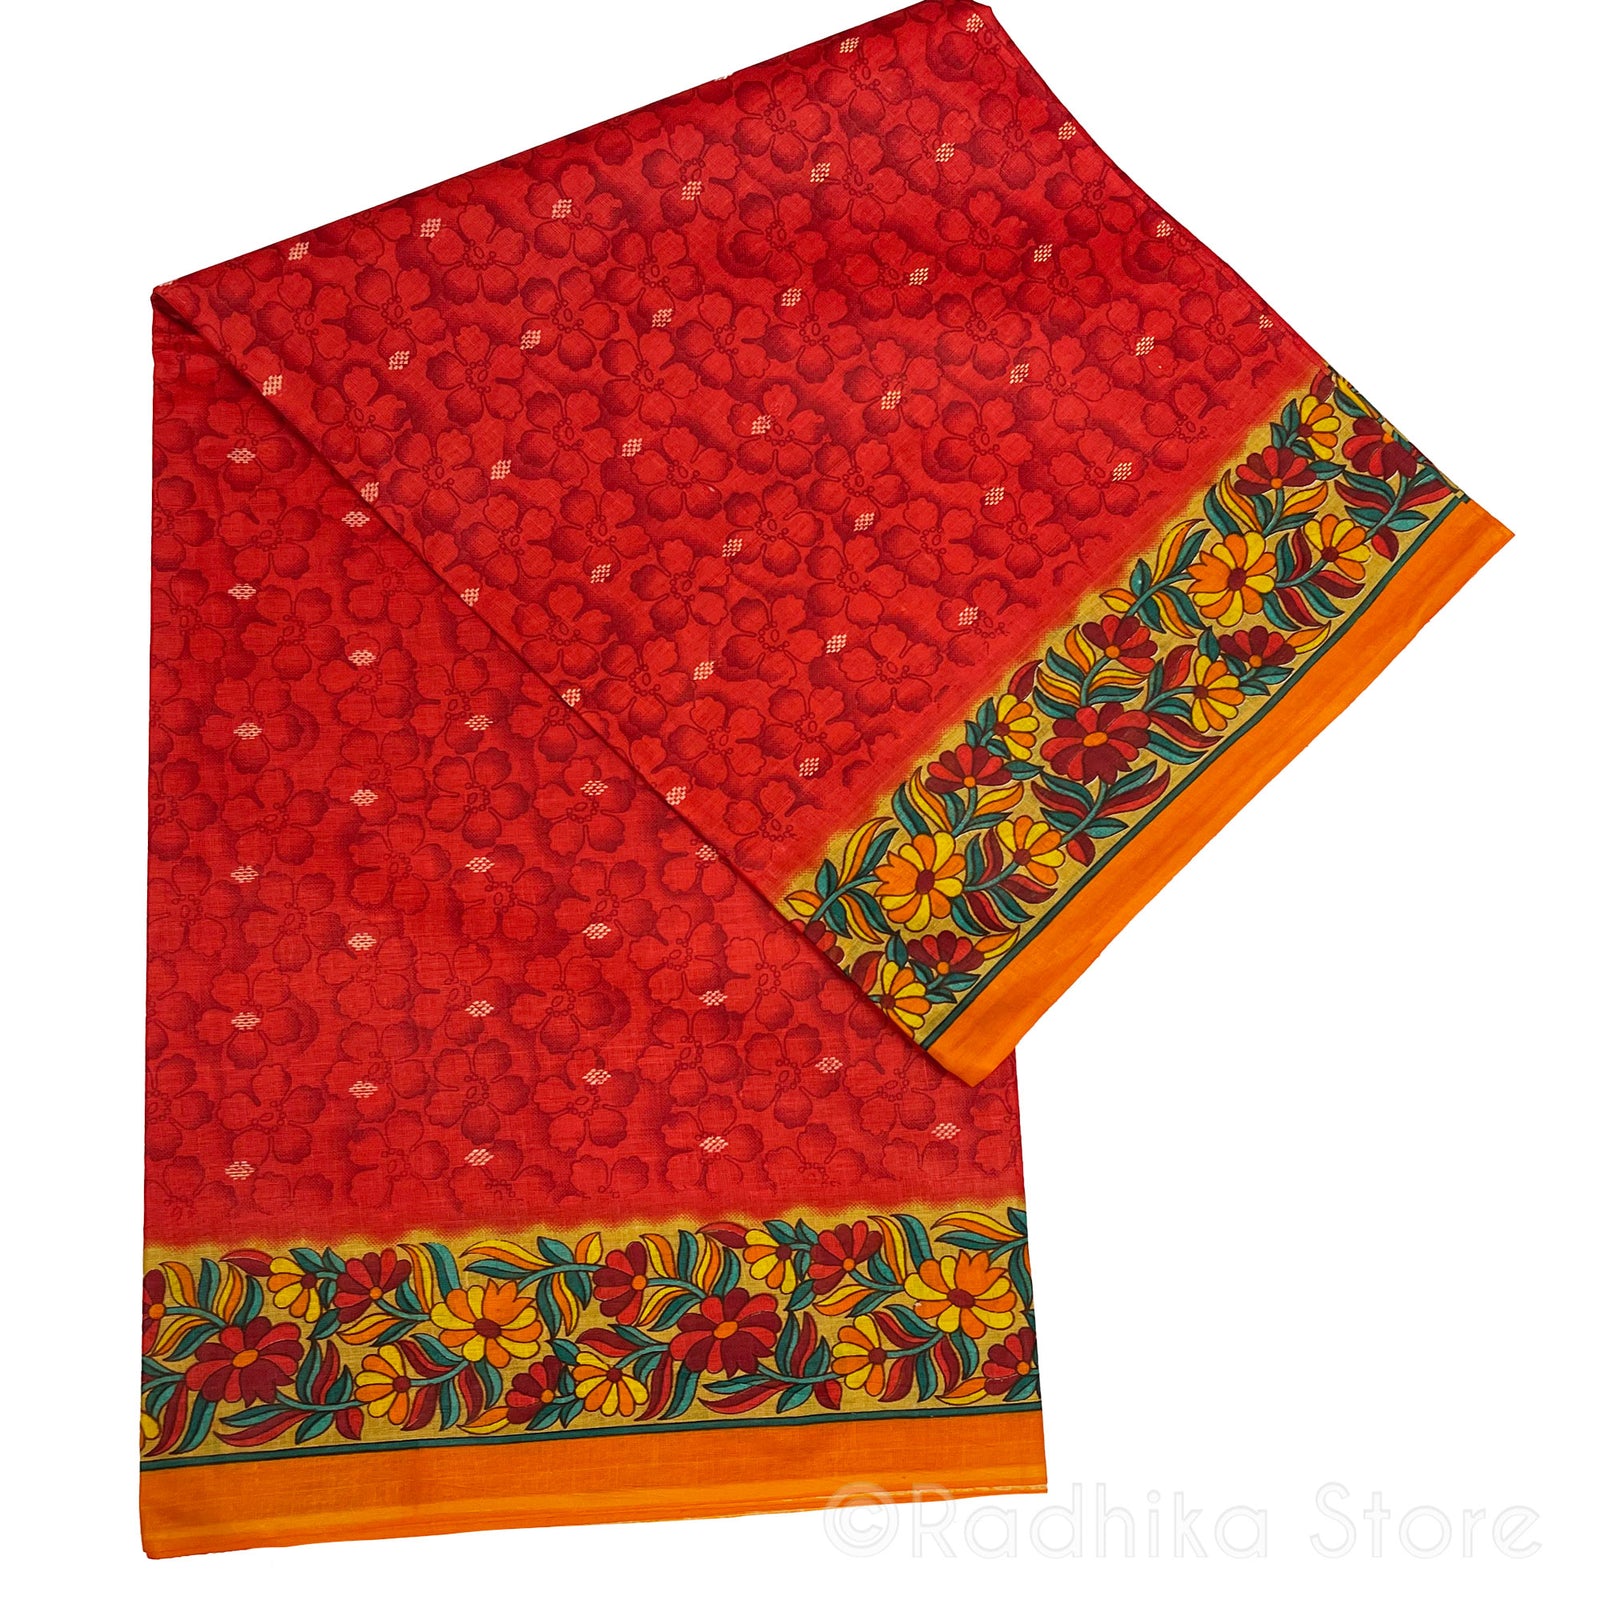 Turmeric Color Cotton Petticoat/ Slip - S, M, L, Xl - Radhika Store